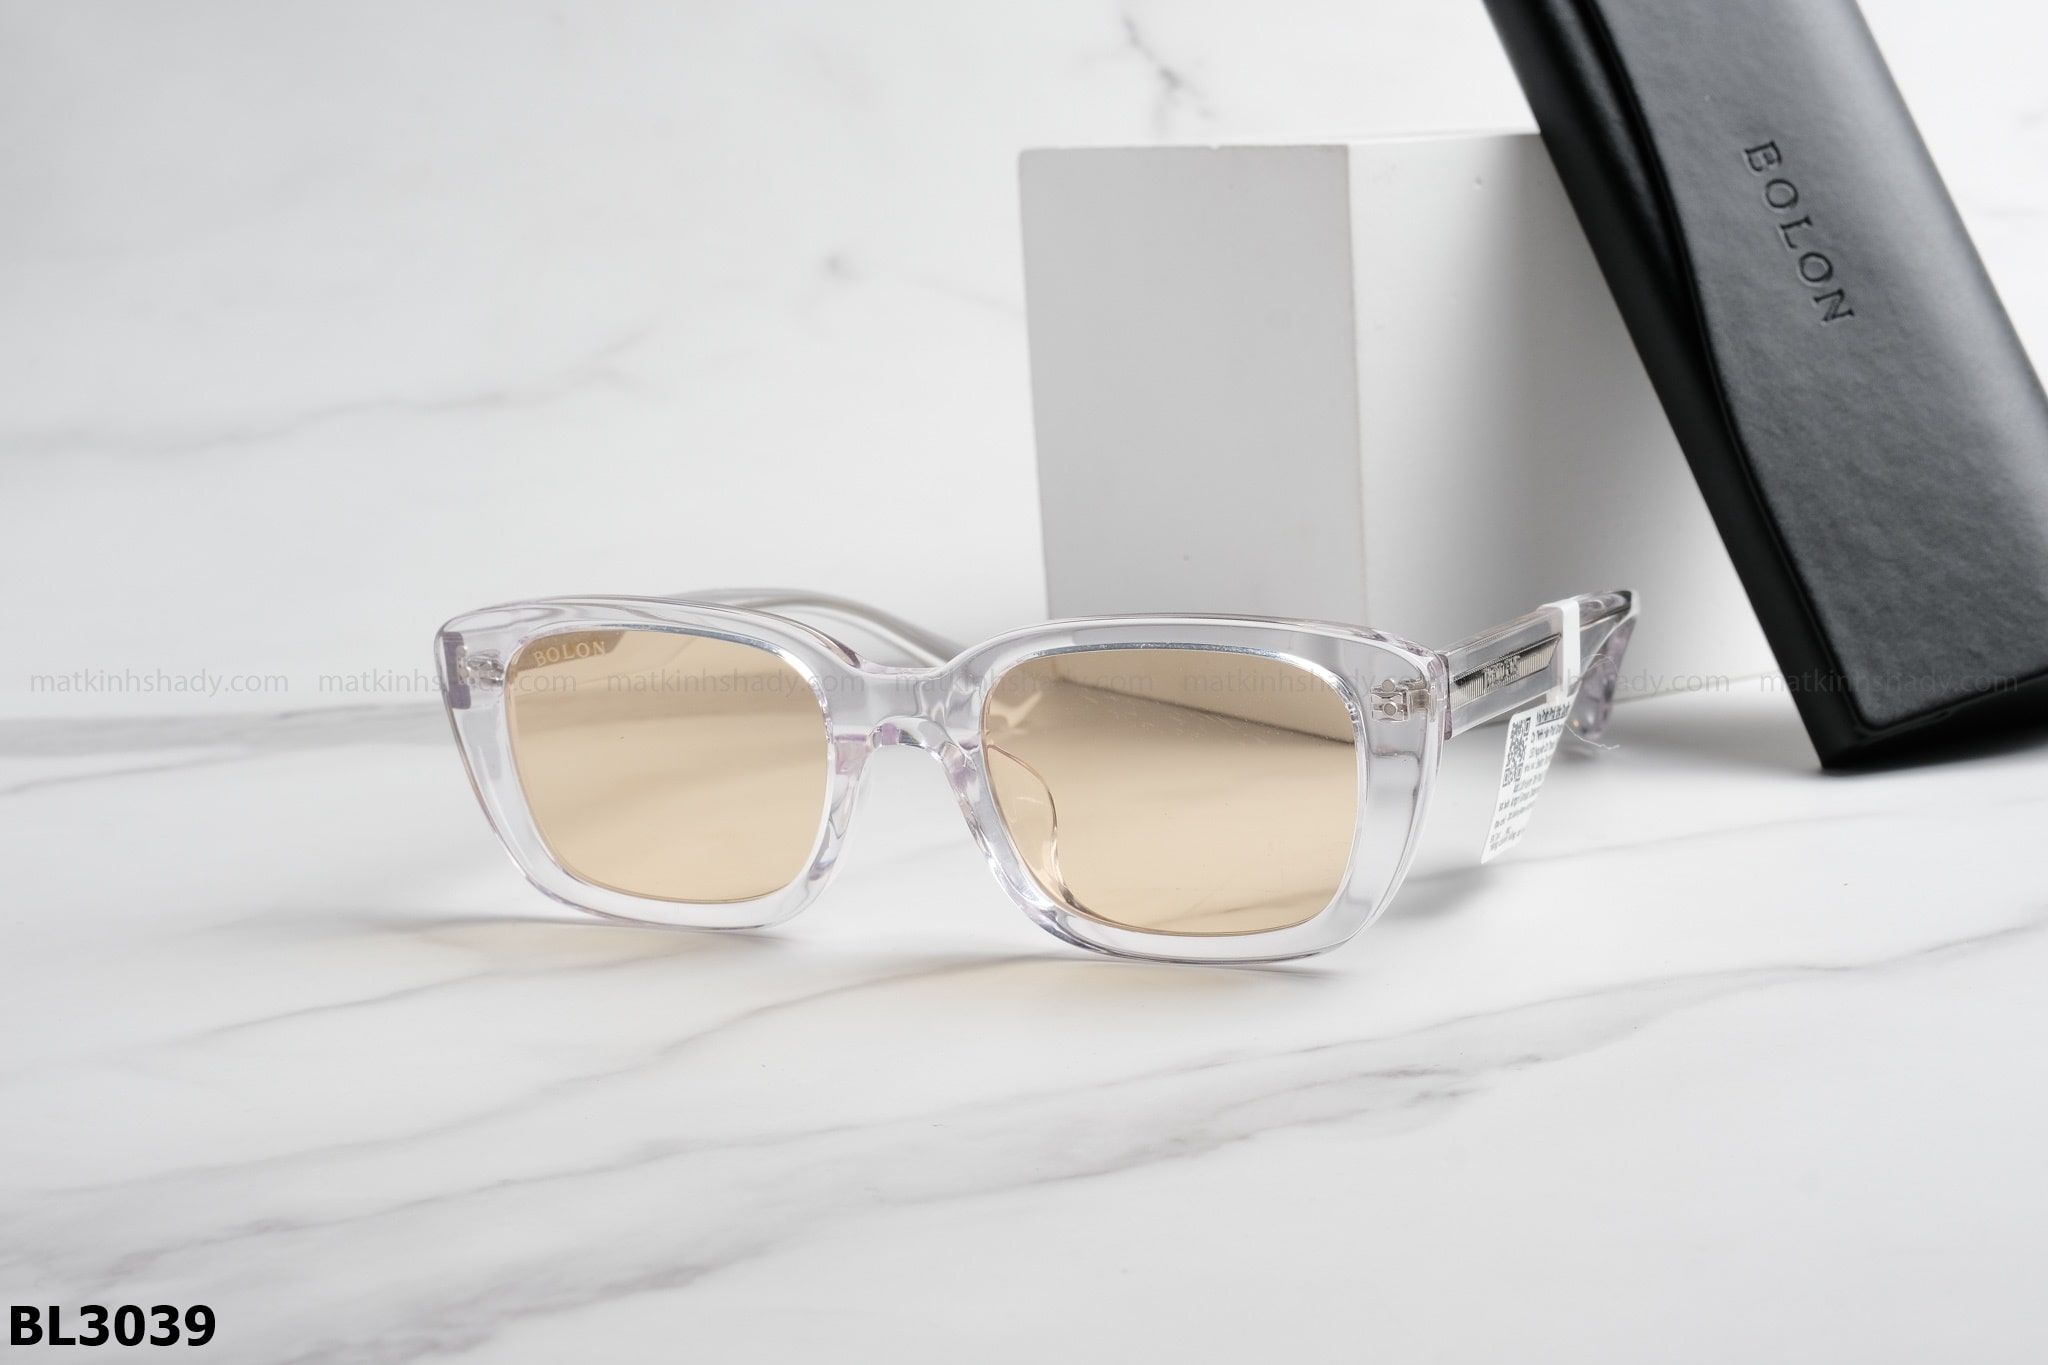  Bolon Eyewear - Sunglasses - BL3039 